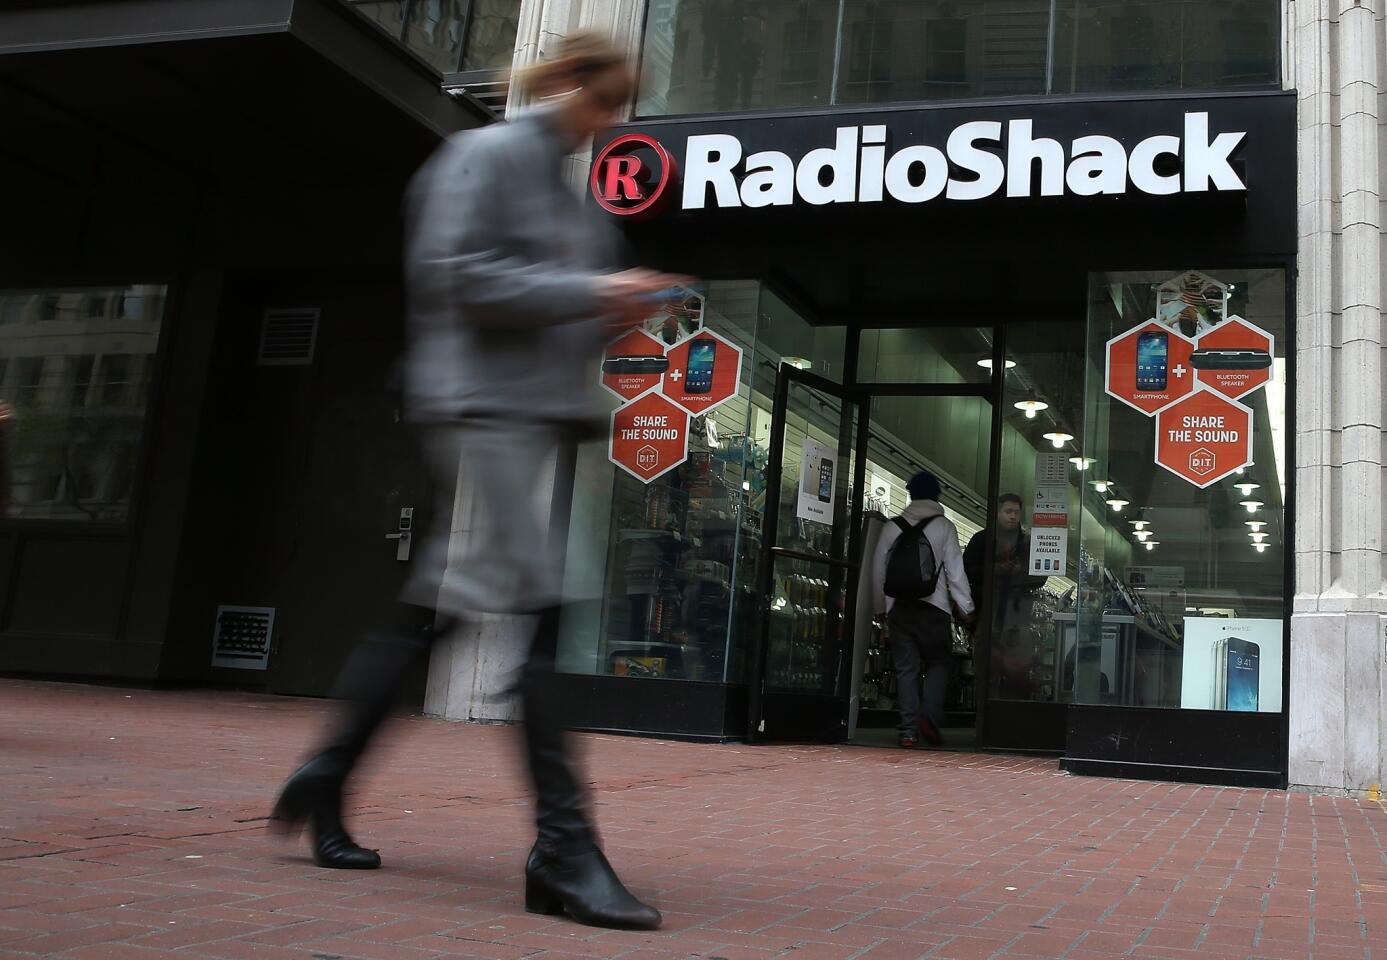 More than 1,000 RadioShack stores